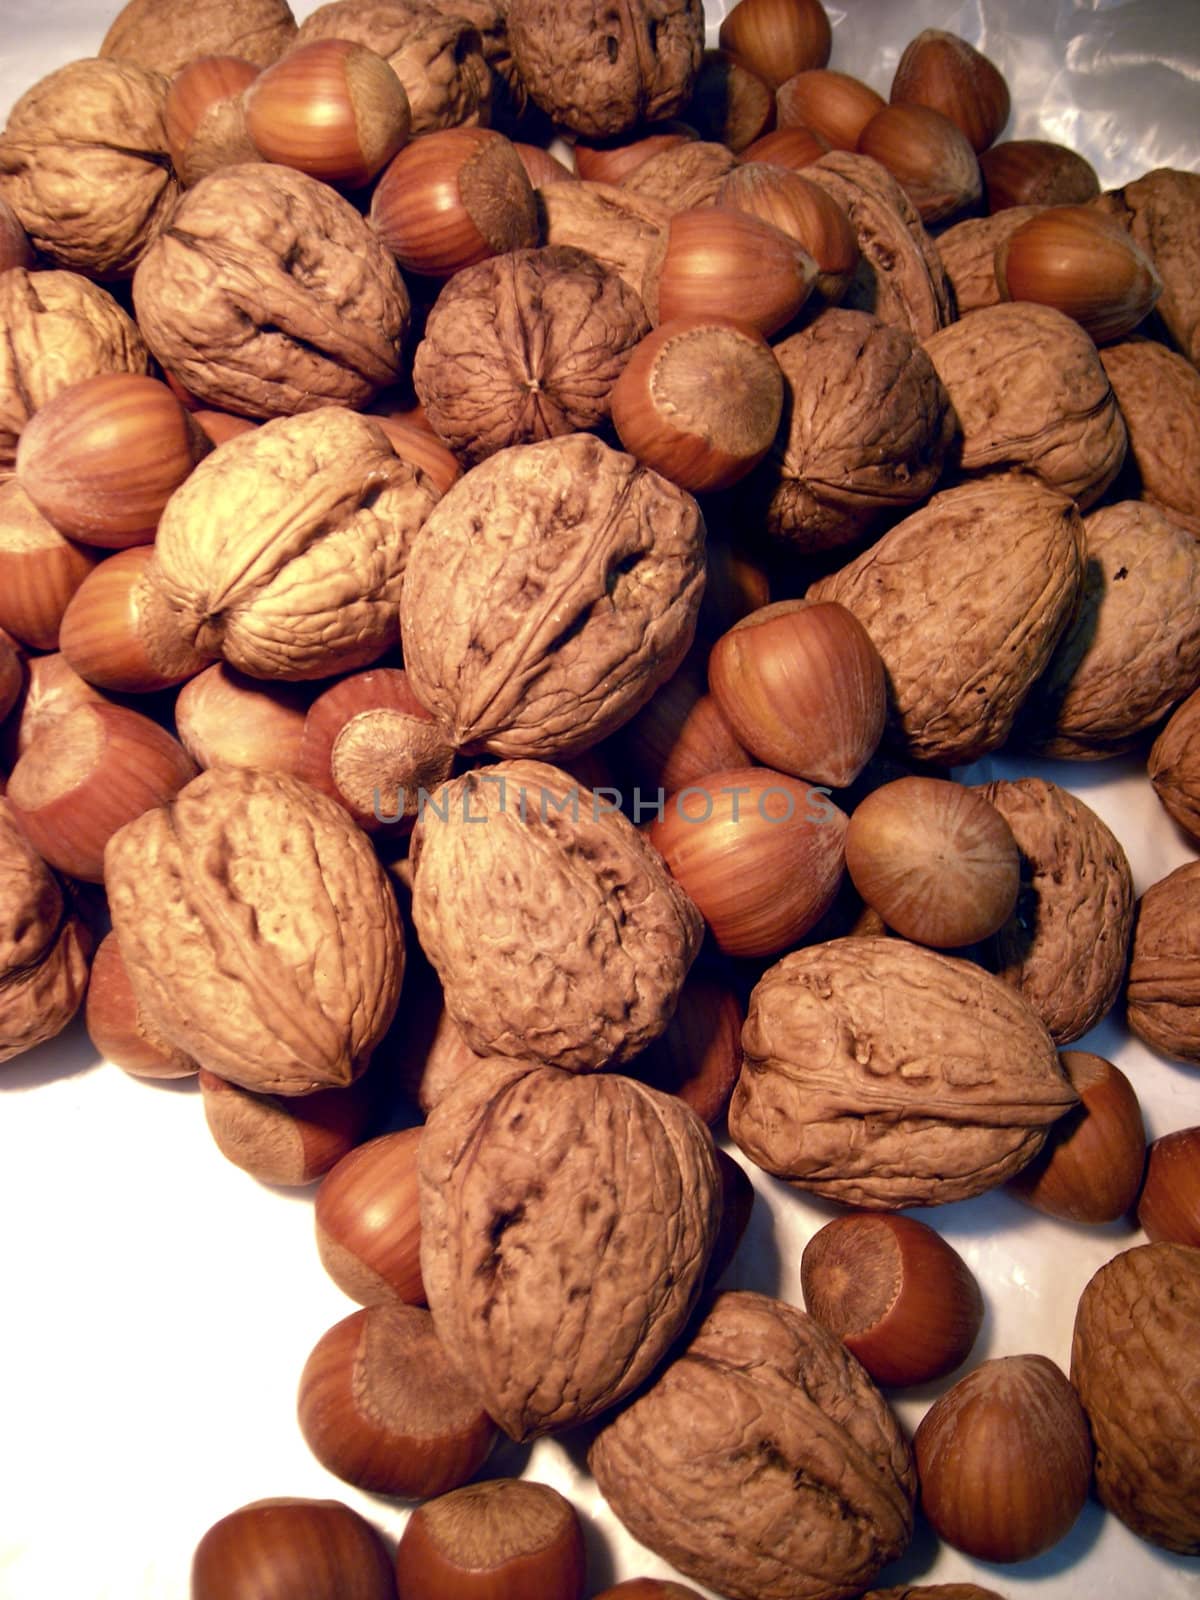 A group of walnuts and hazelnuts.